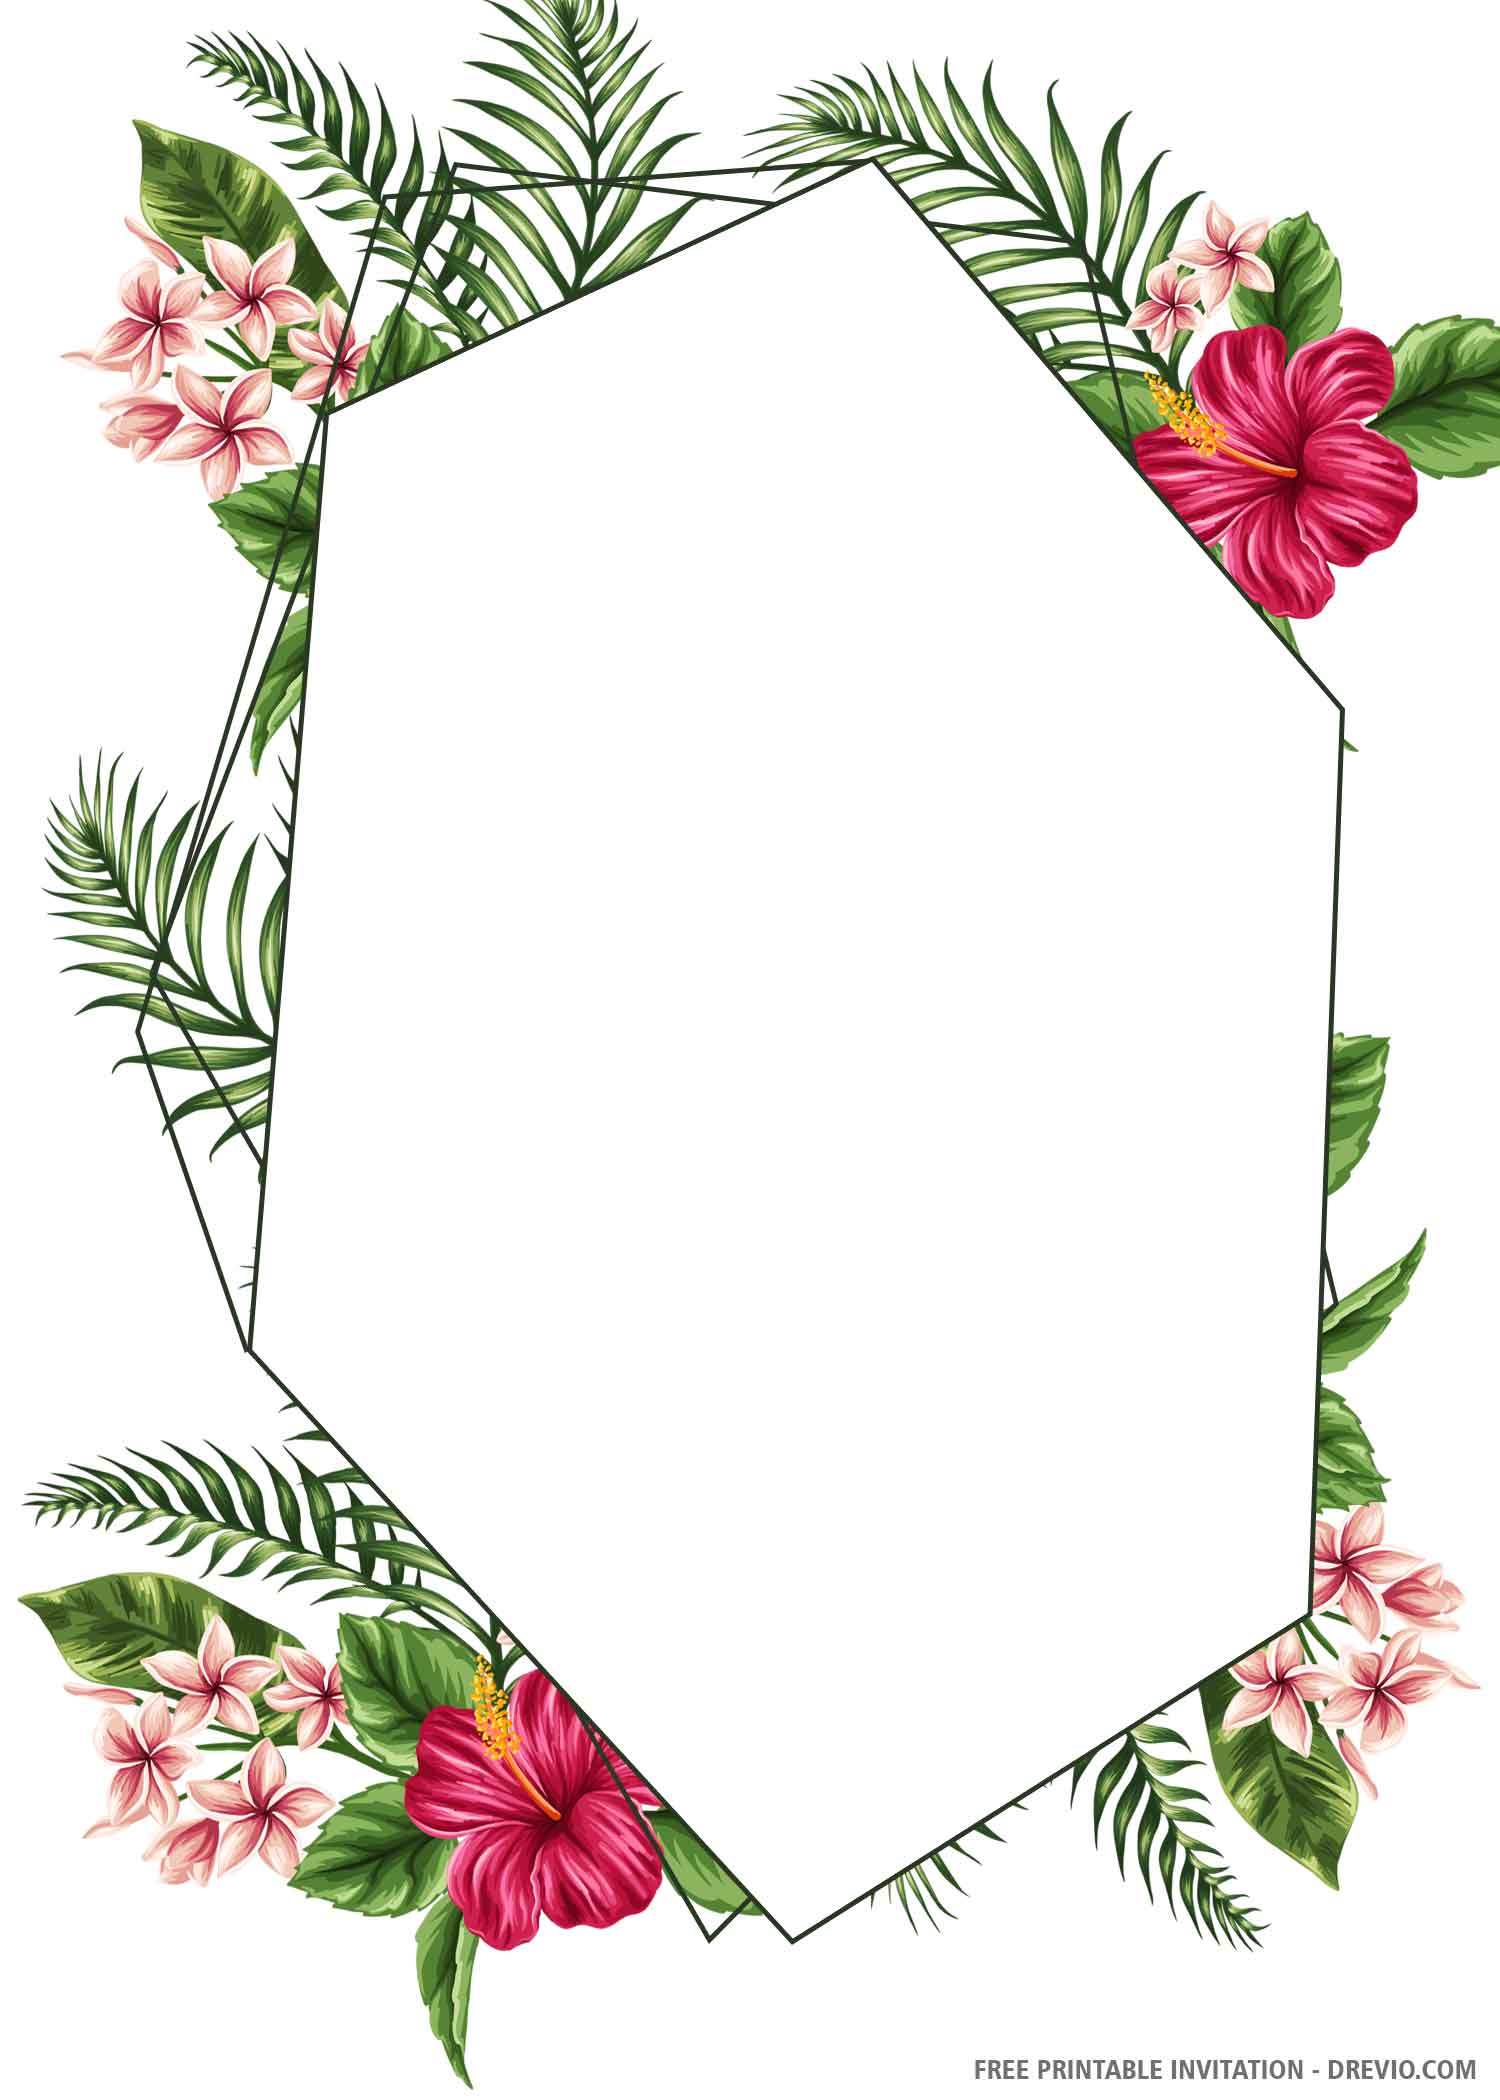 (FREE PRINTABLE) Tropical Hexagon Wedding Invitation Templates DREVIO